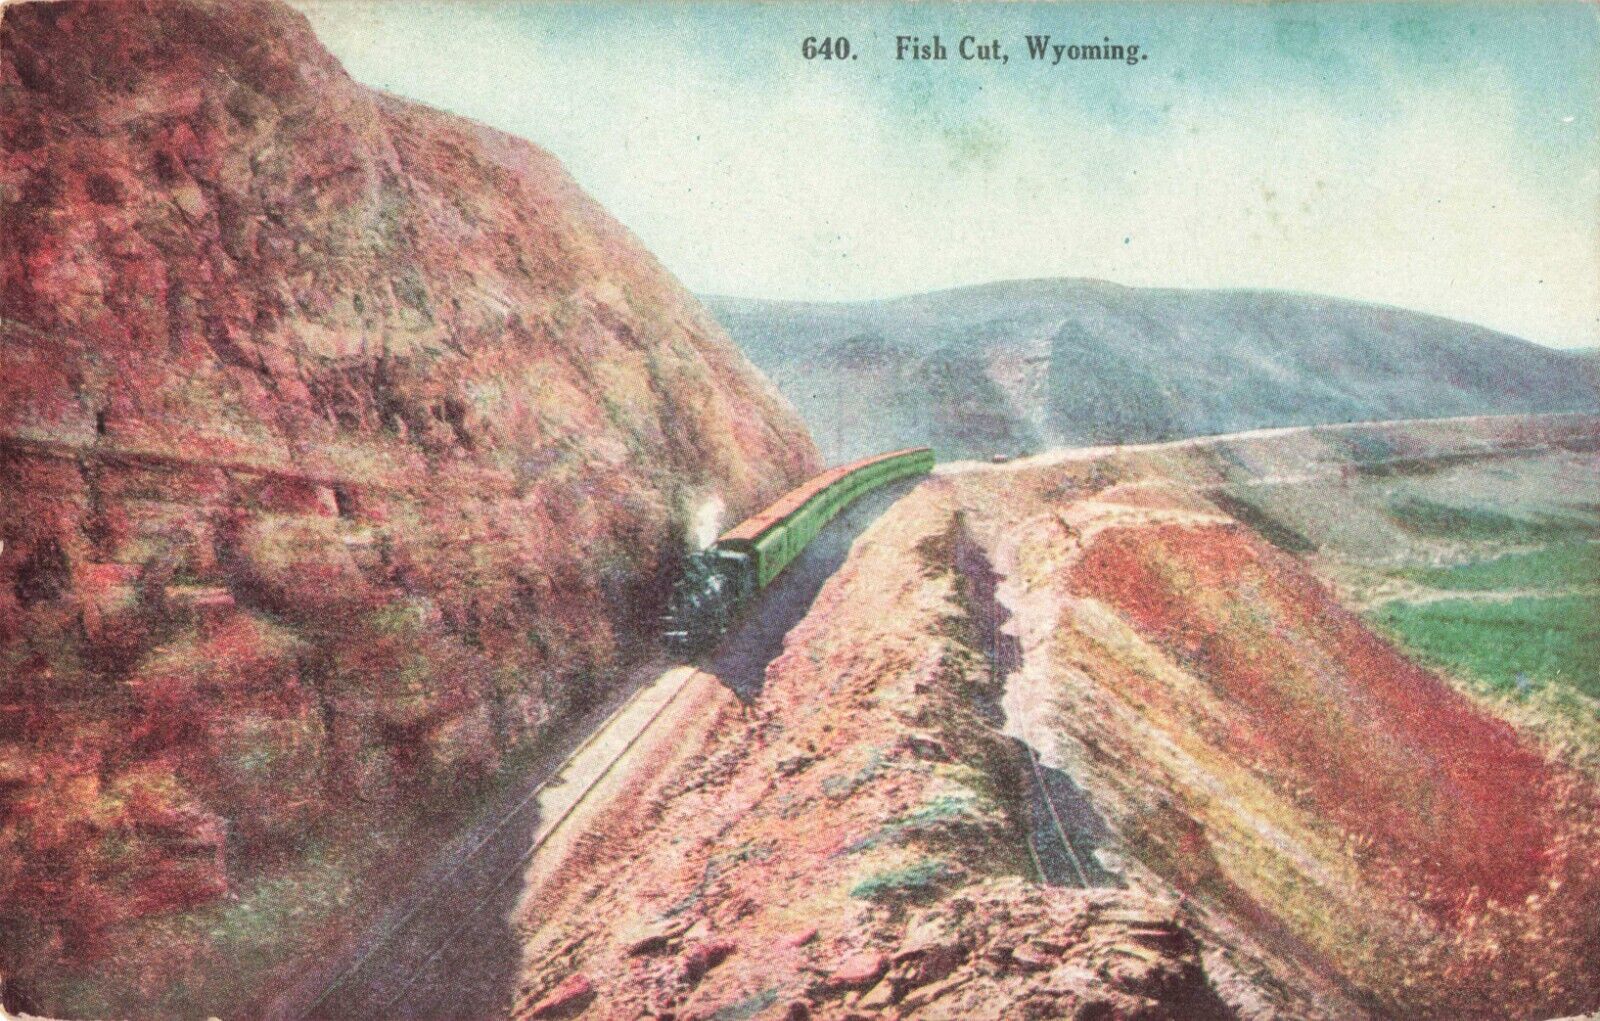 Fish Cut Wyoming, Union Pacific Railroad Train, Vintage Postcard